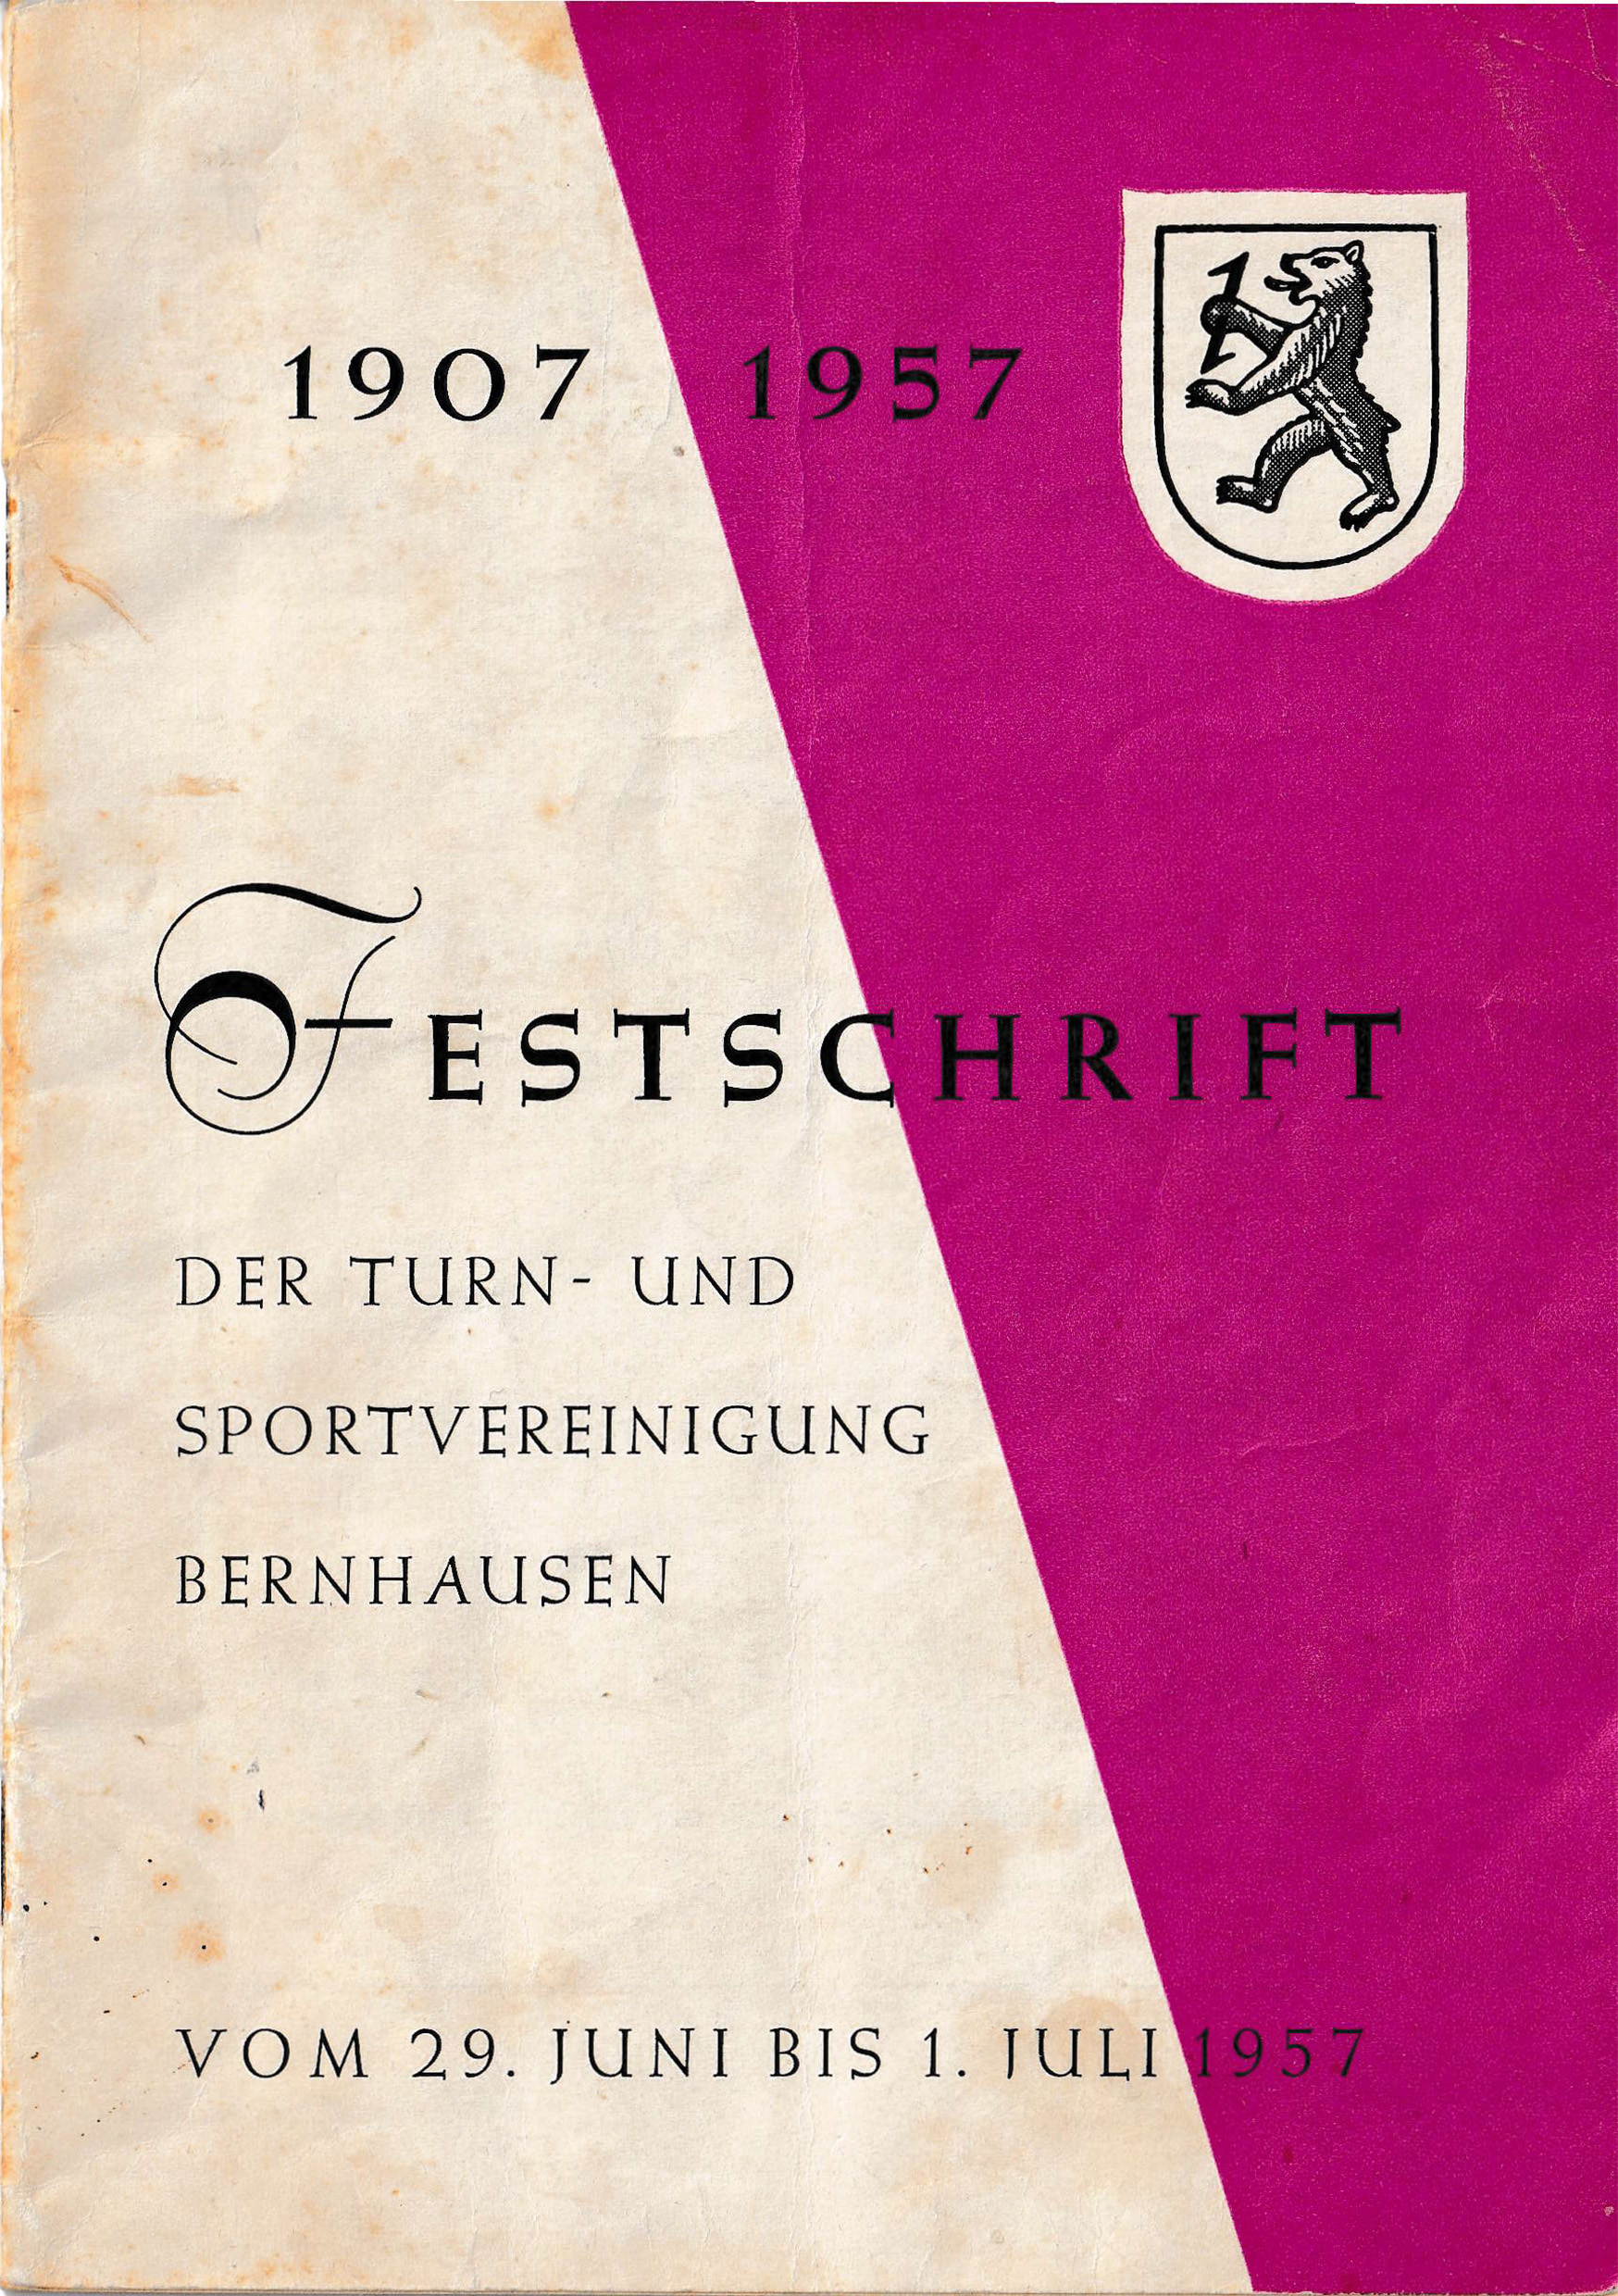 TSV Bernhausen Festschrift 1957 Titel